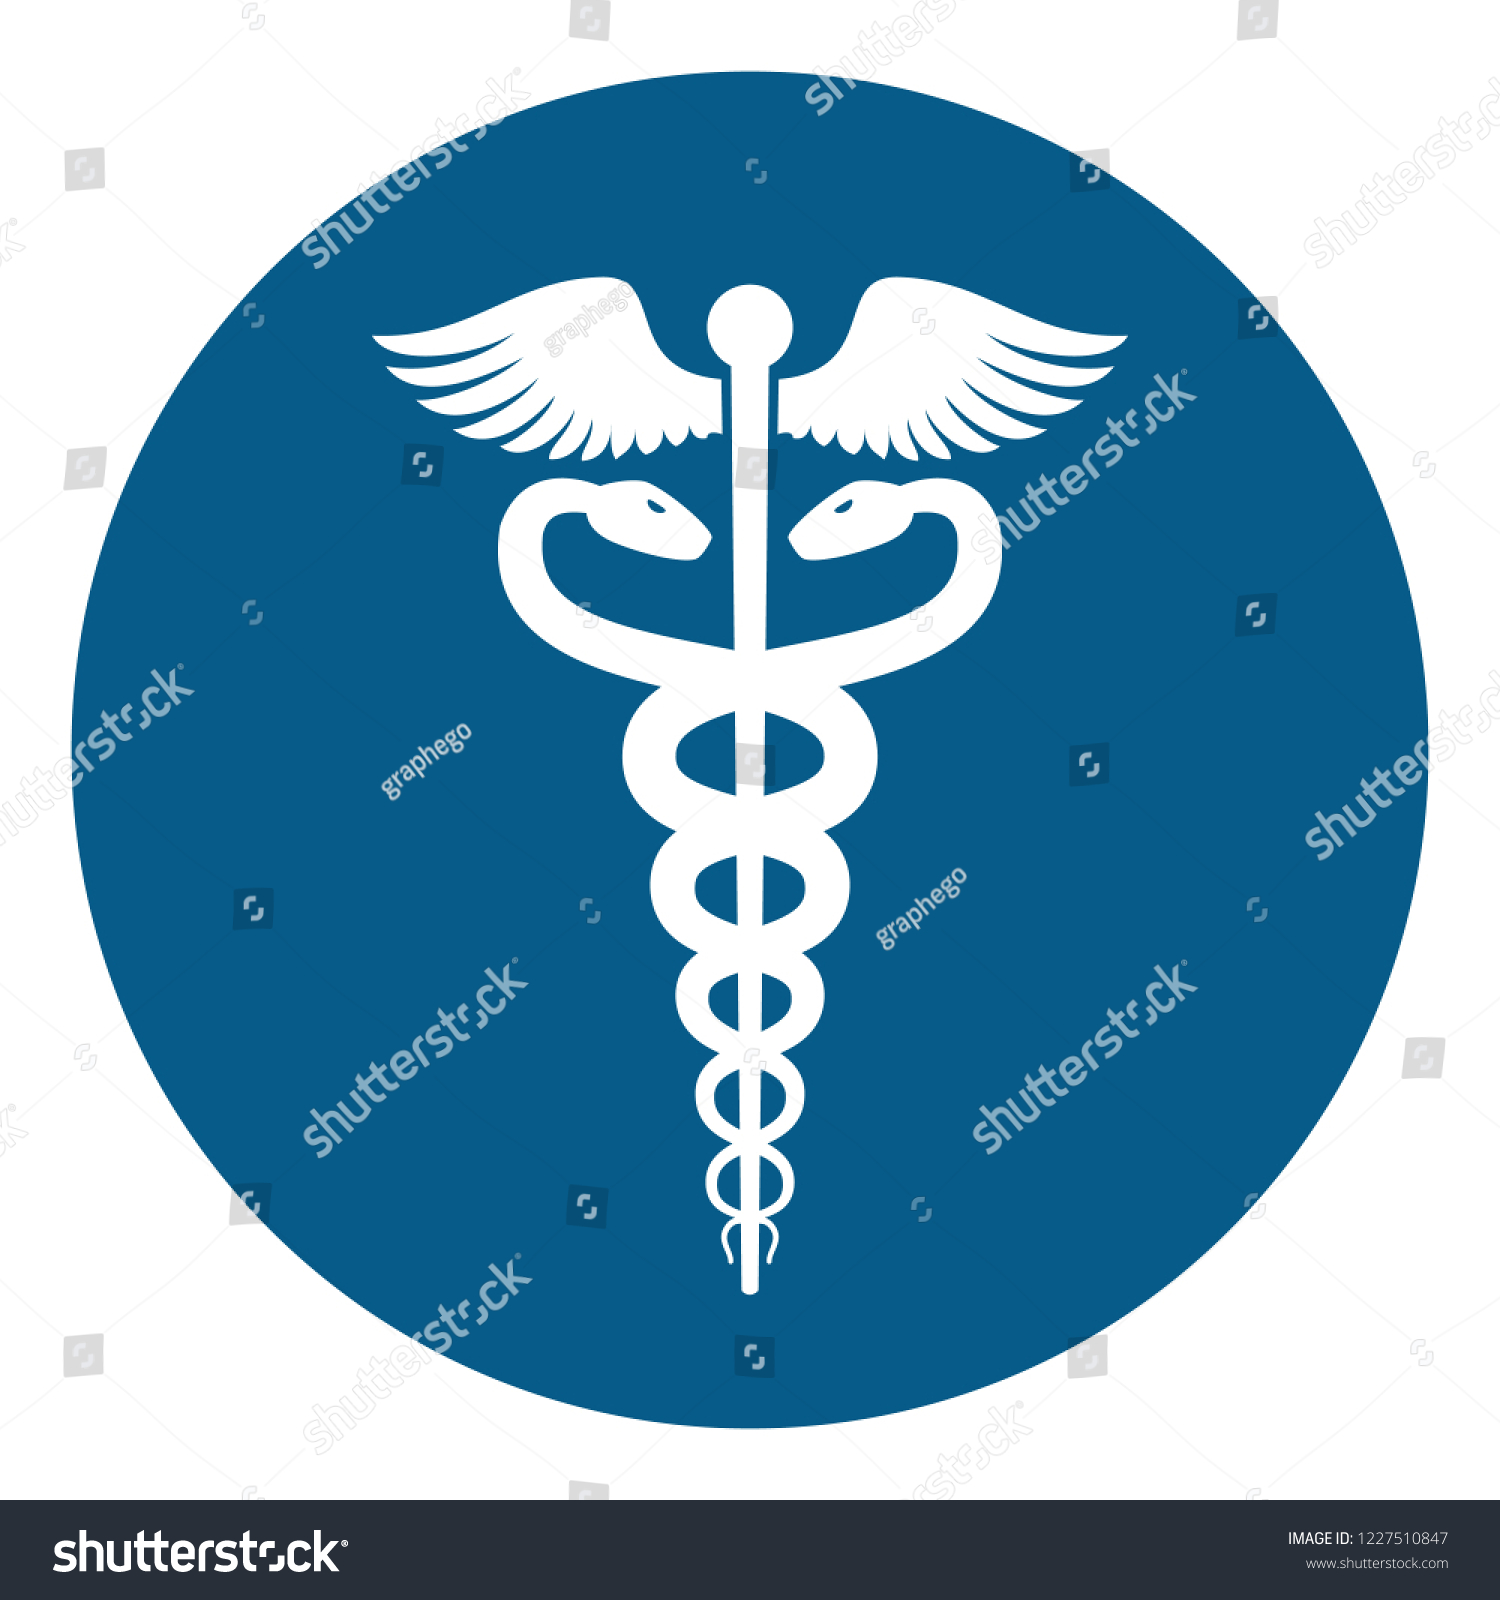 Medical Healthcare Symbol Caduceus Wings Flat Stock Illustration ...